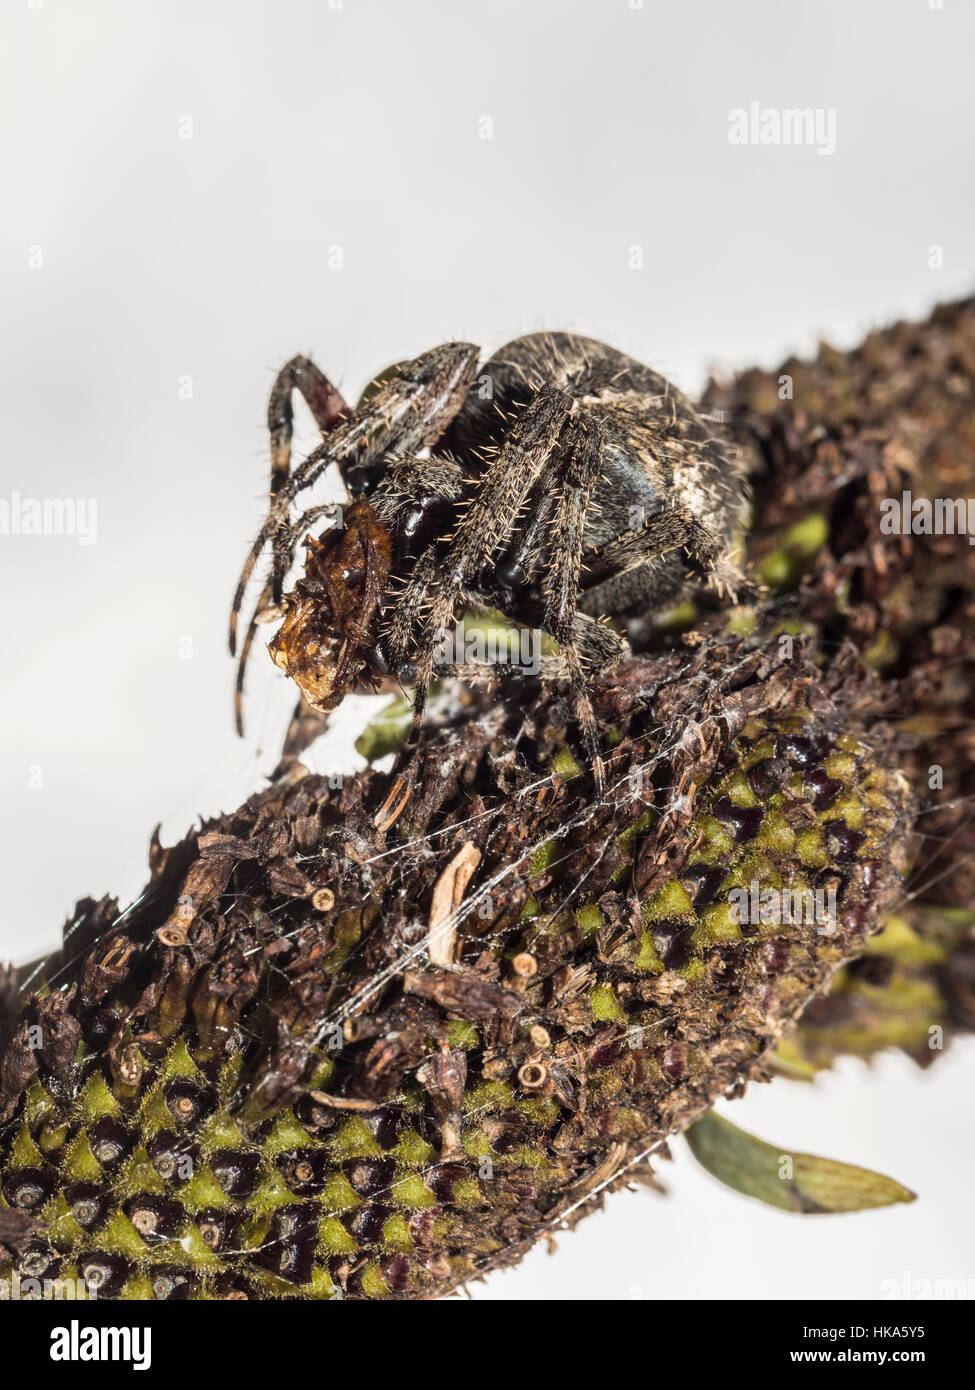 Common house spider,Parasteatoda tepidariorum, referred to internationally as the American house spider Stock Photo